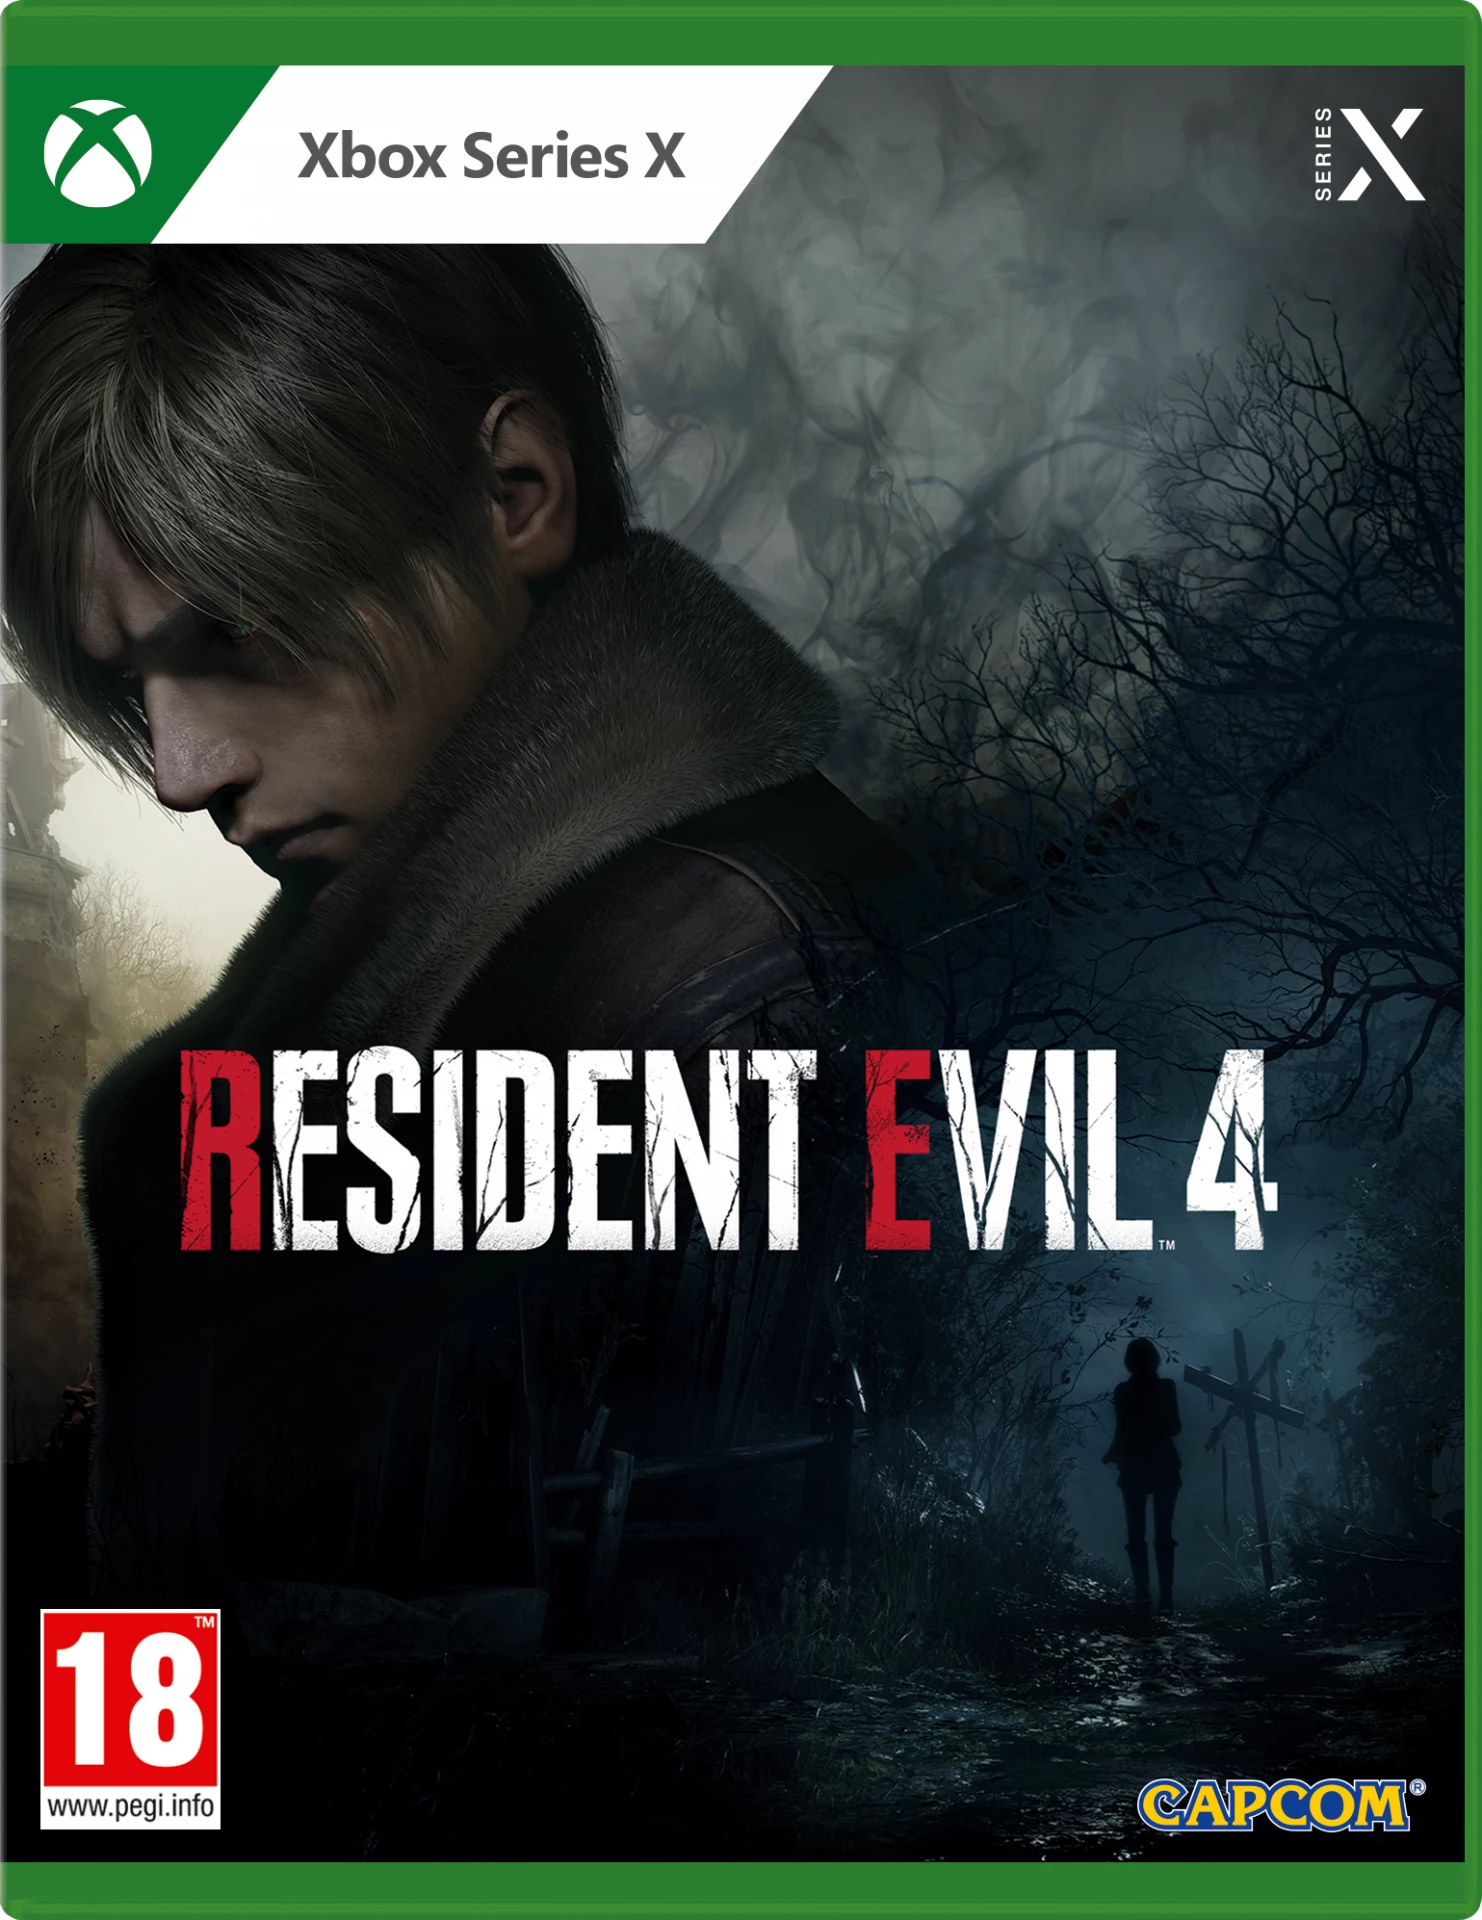 Resident Evil 4 Remake (Xbox Series X), Capcom